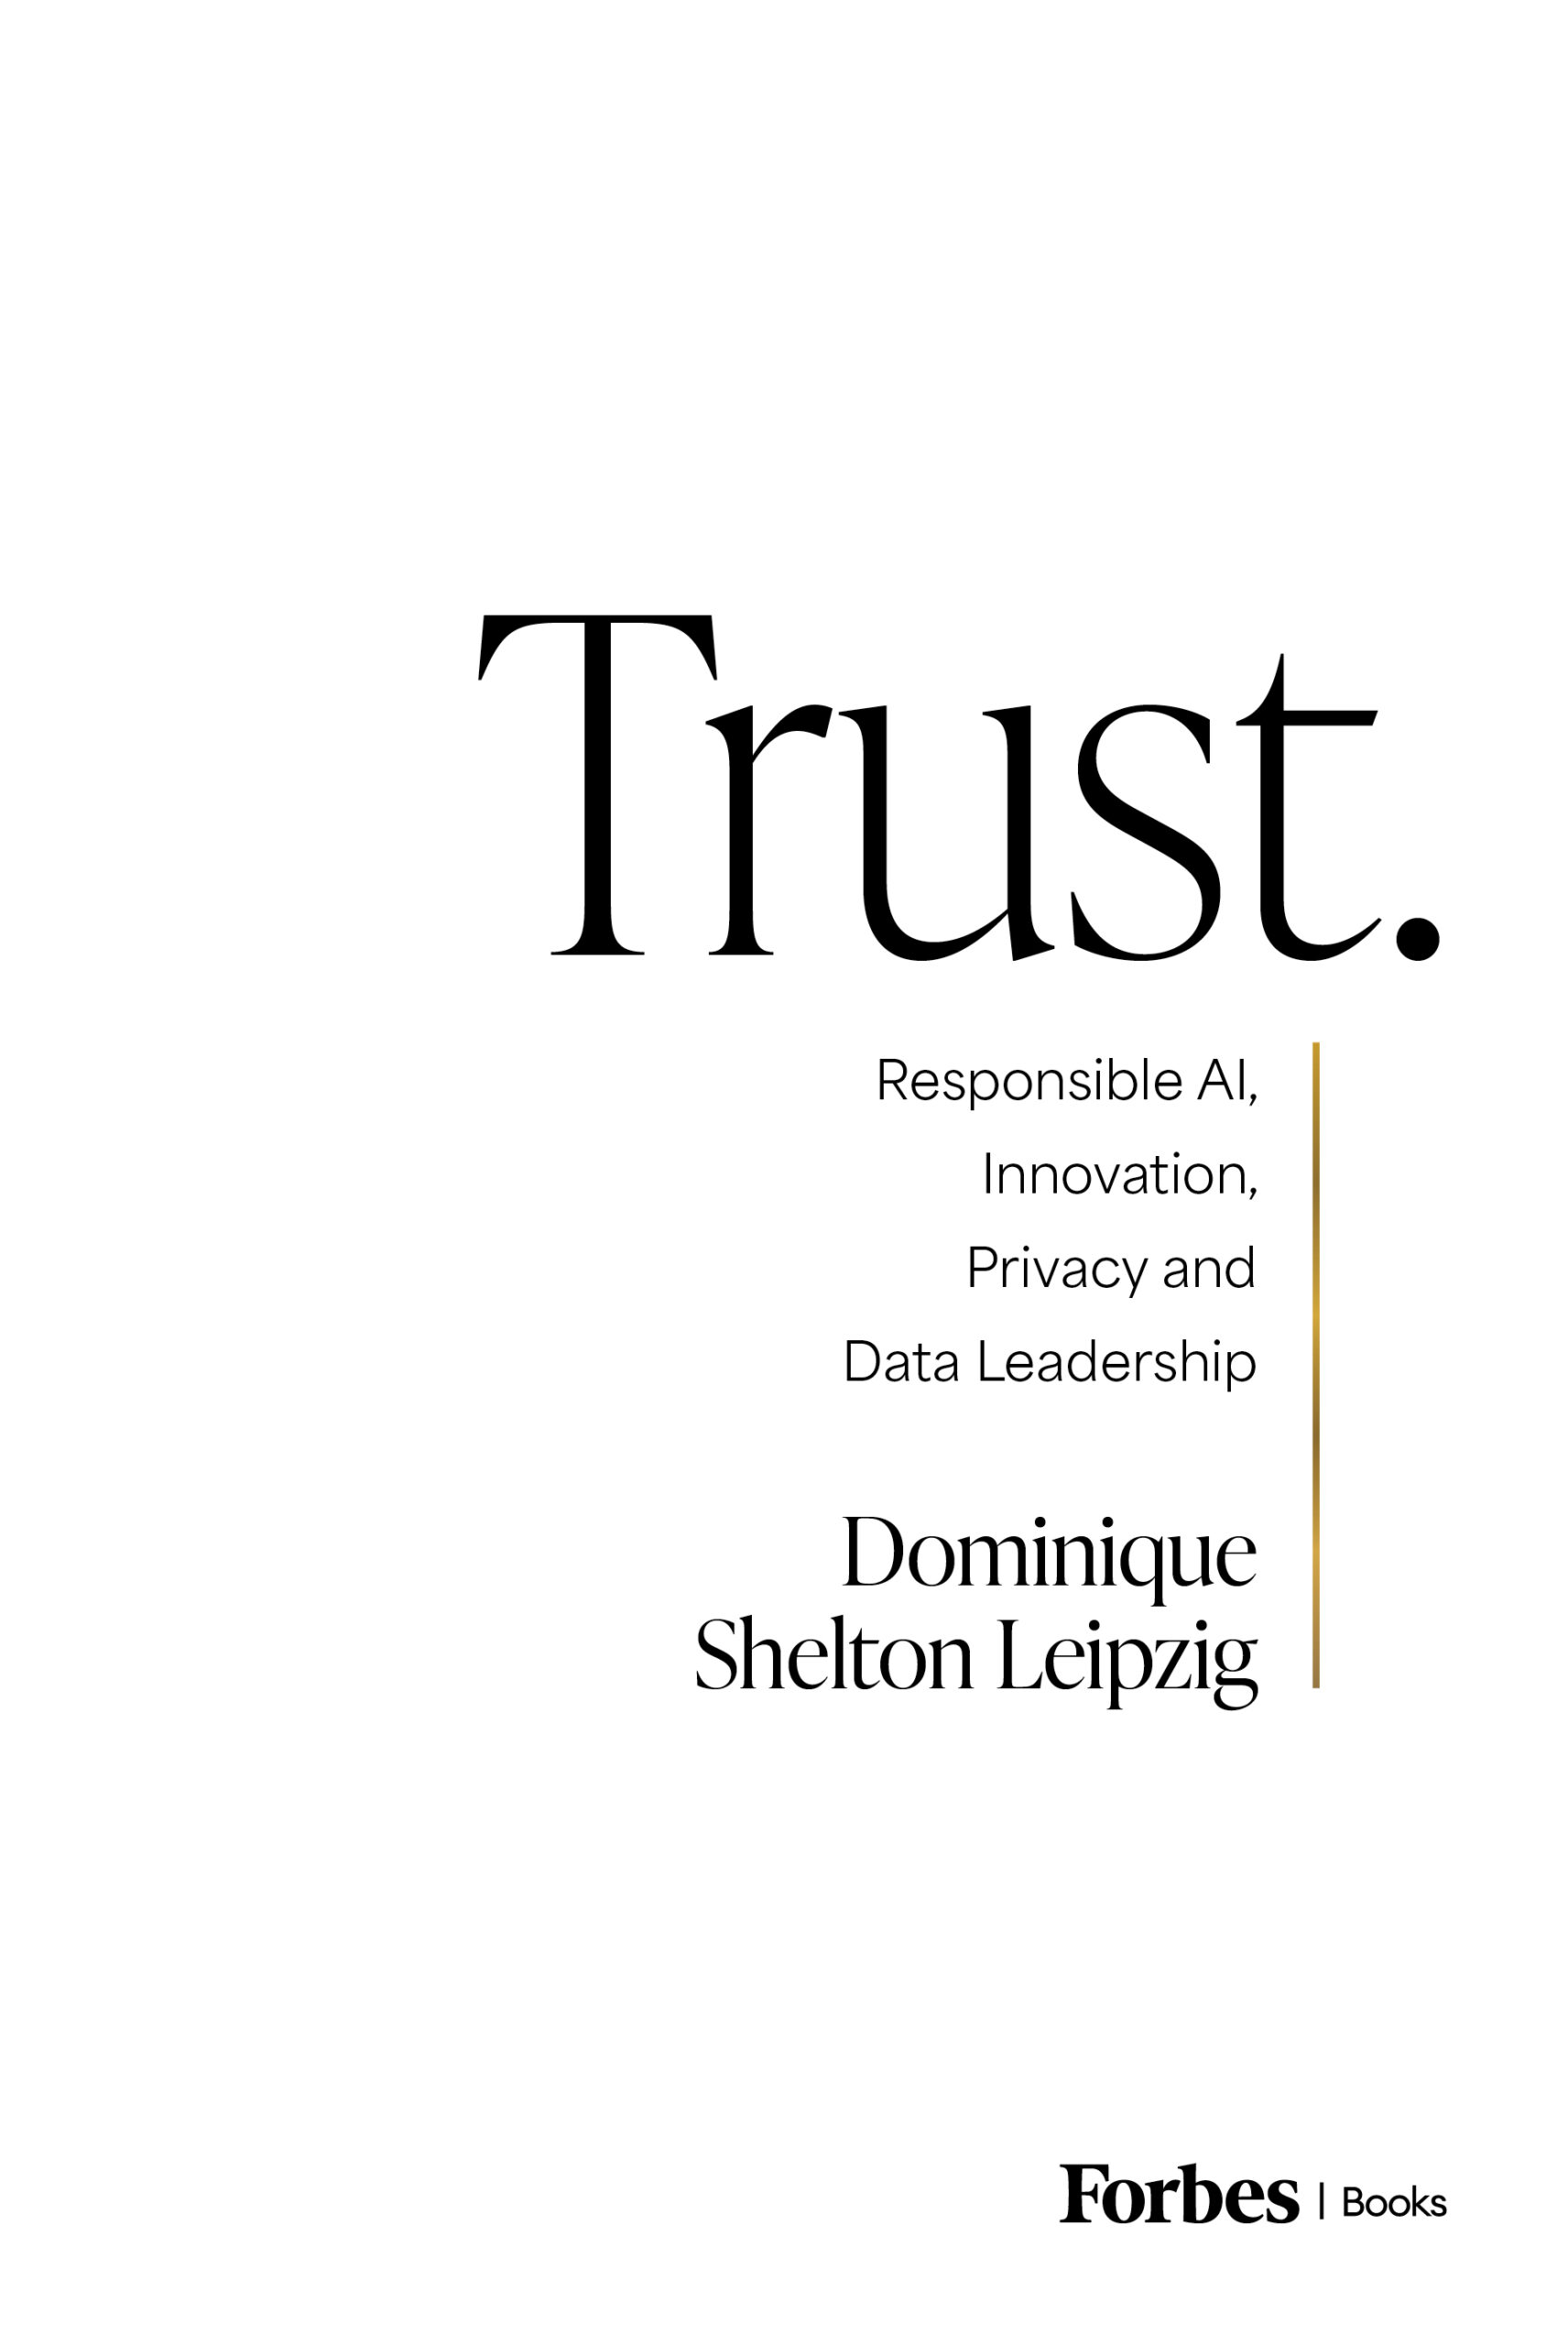 Trust by Dominique Shelton Leipzig